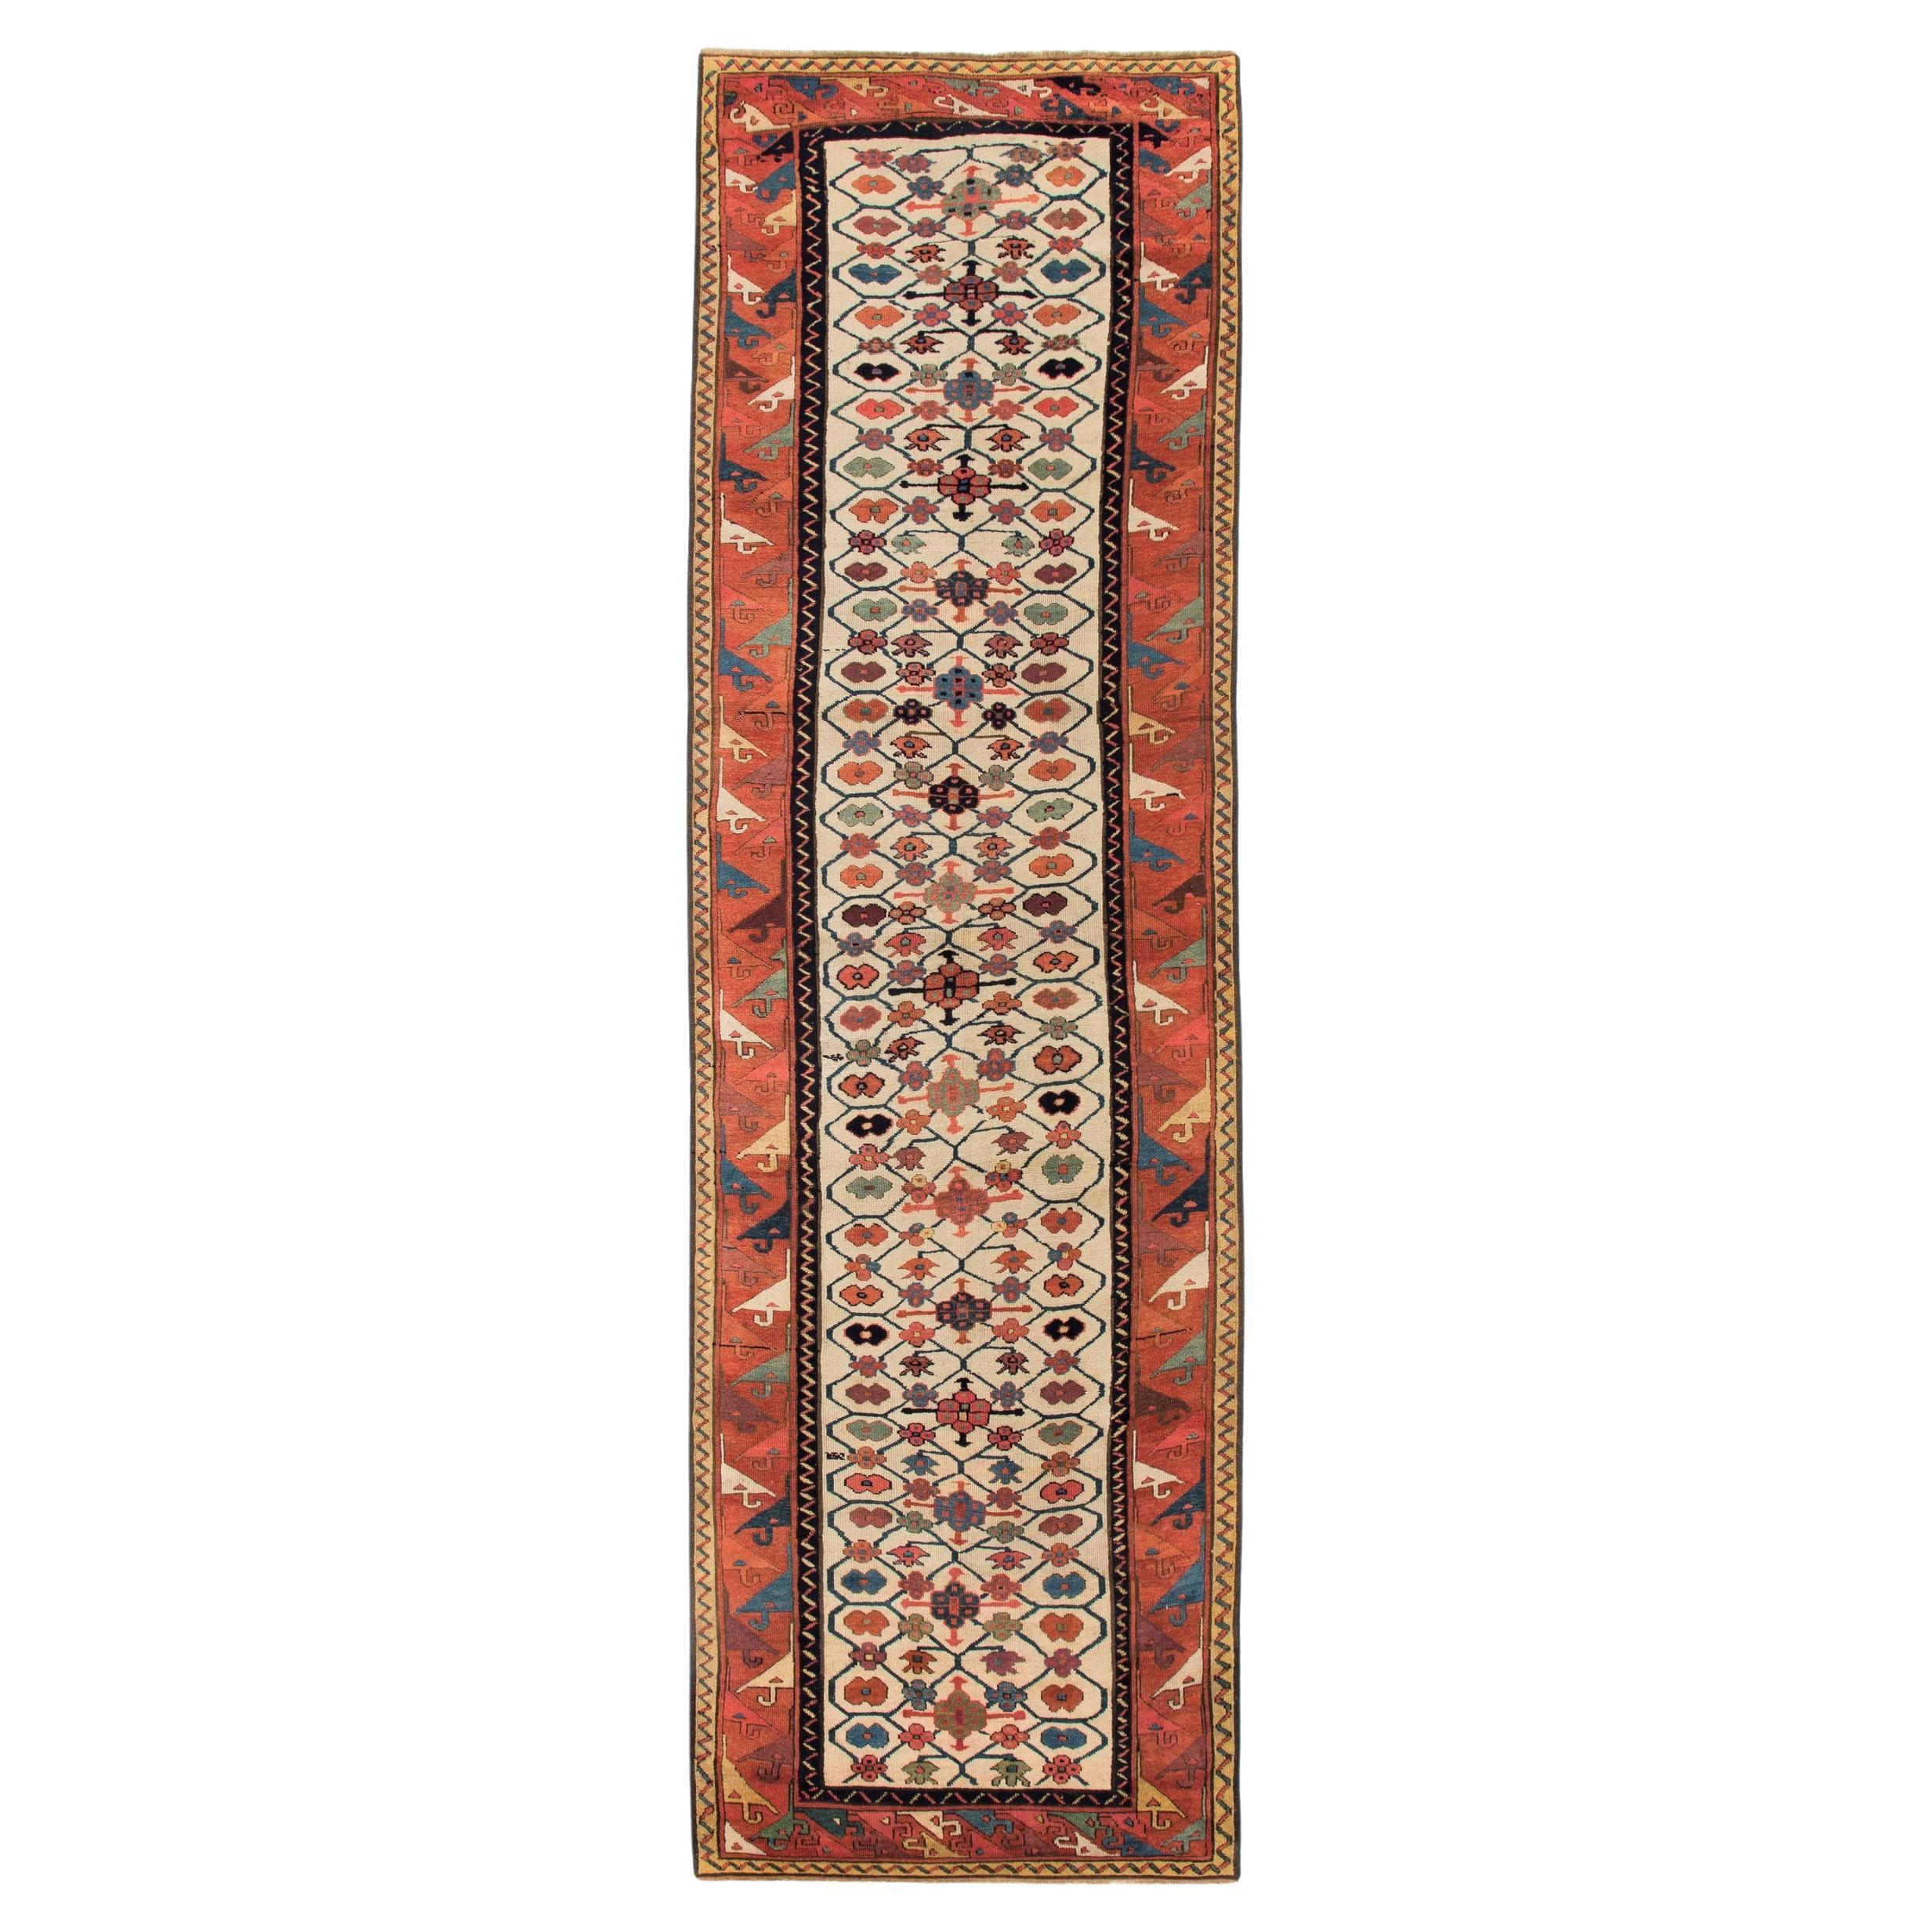 3'2'' x 10'6'' Antique Caucasian Moghan Kazak Runner Rug. Ca 1800